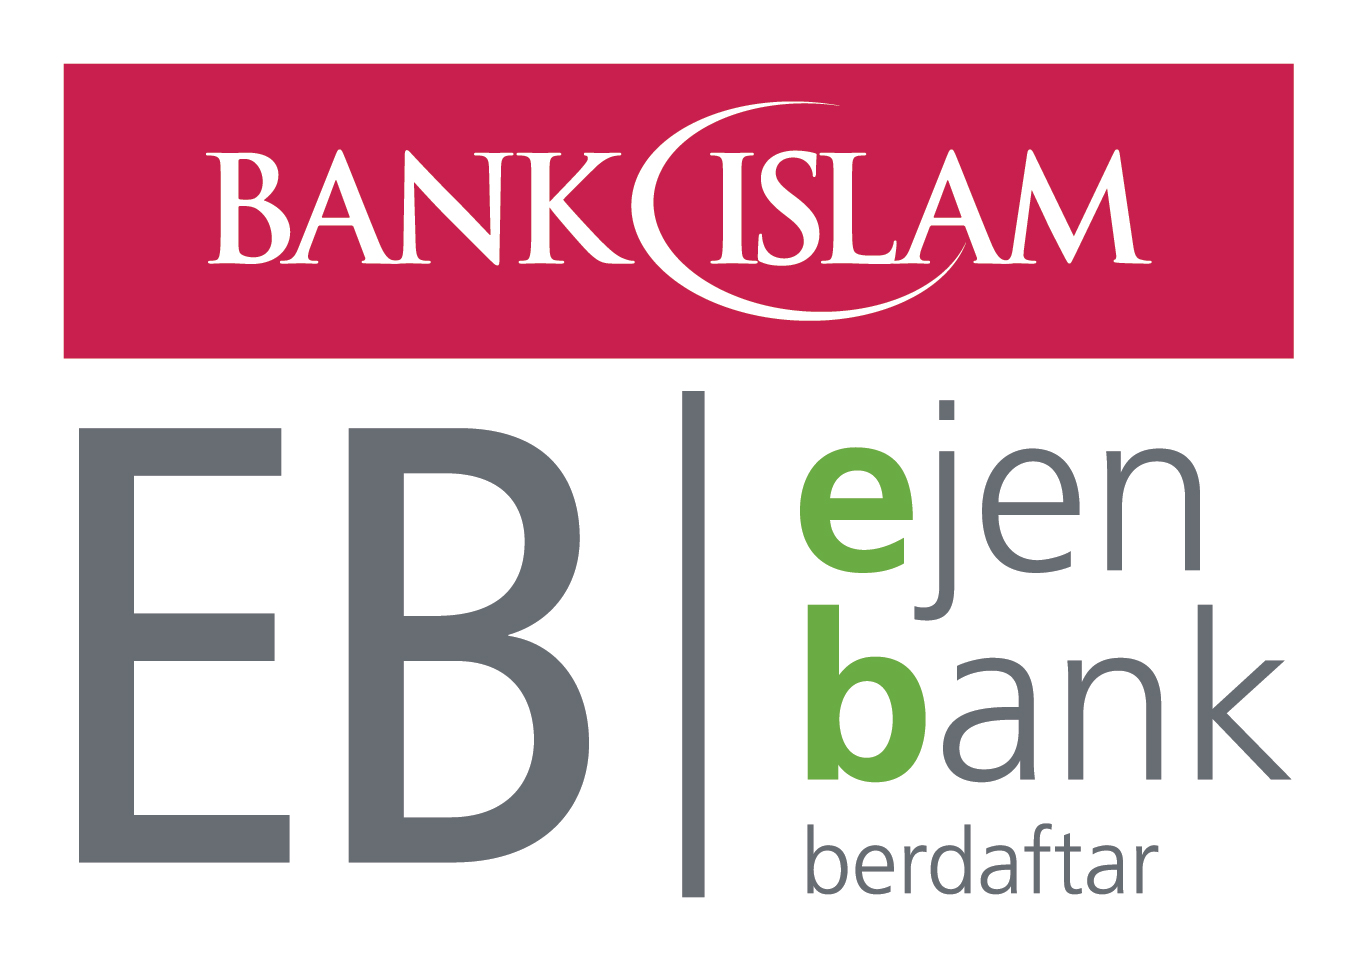 Agent Banking Bank Islam Malaysia Berhad